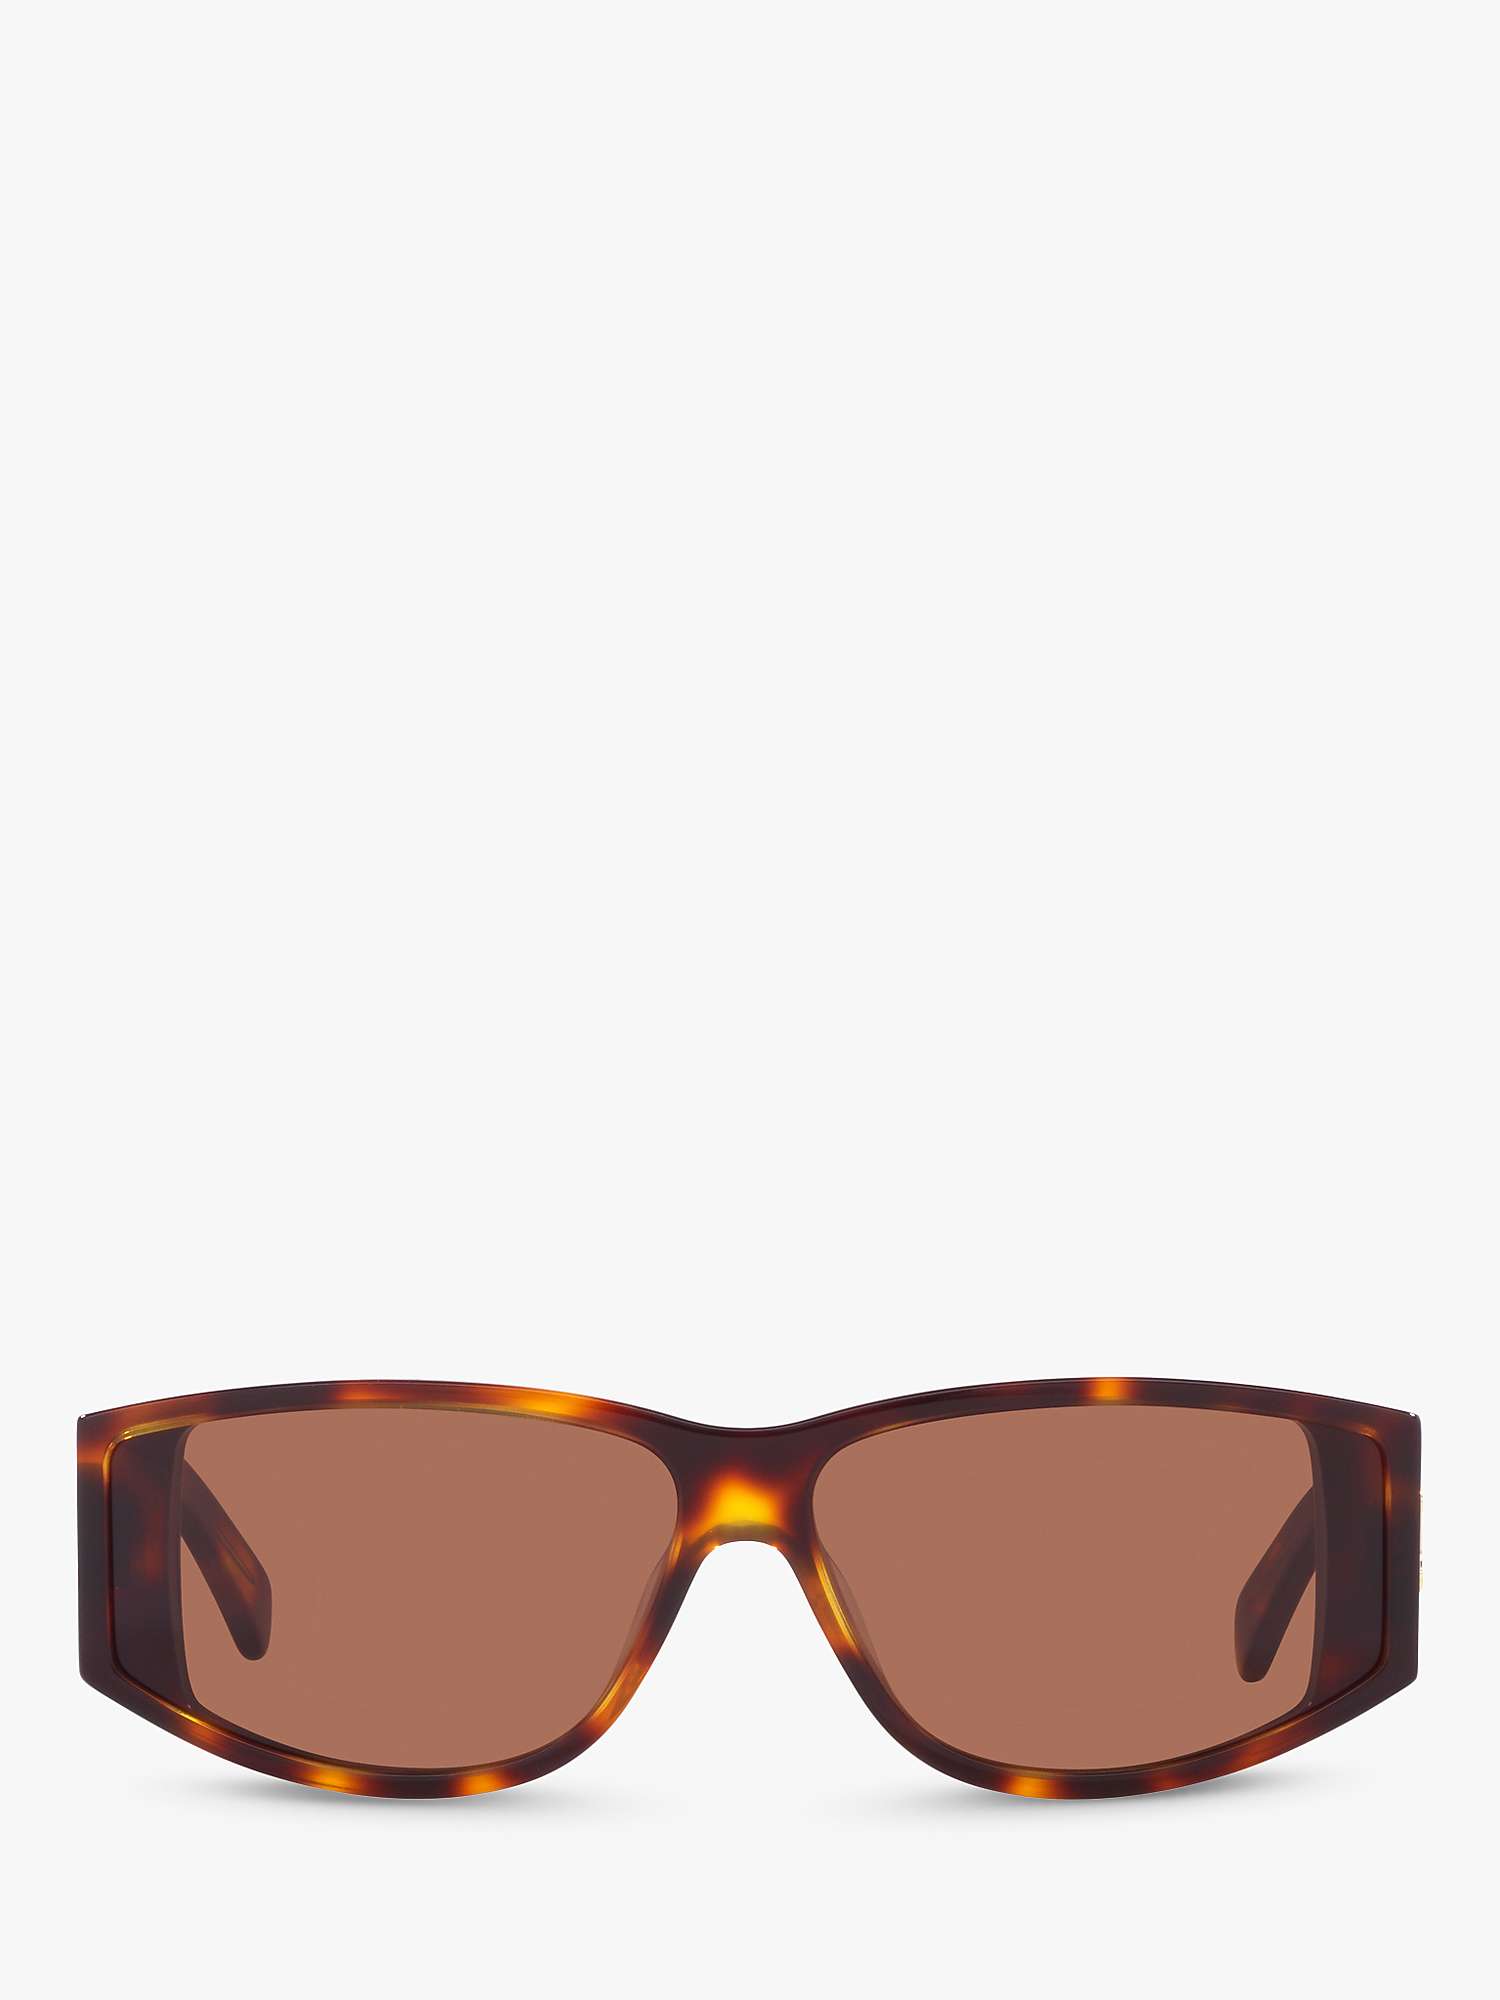 Buy Celine CL40227U Women's Rectangular Sunglasses, Tortoise Blonde/Brown Online at johnlewis.com